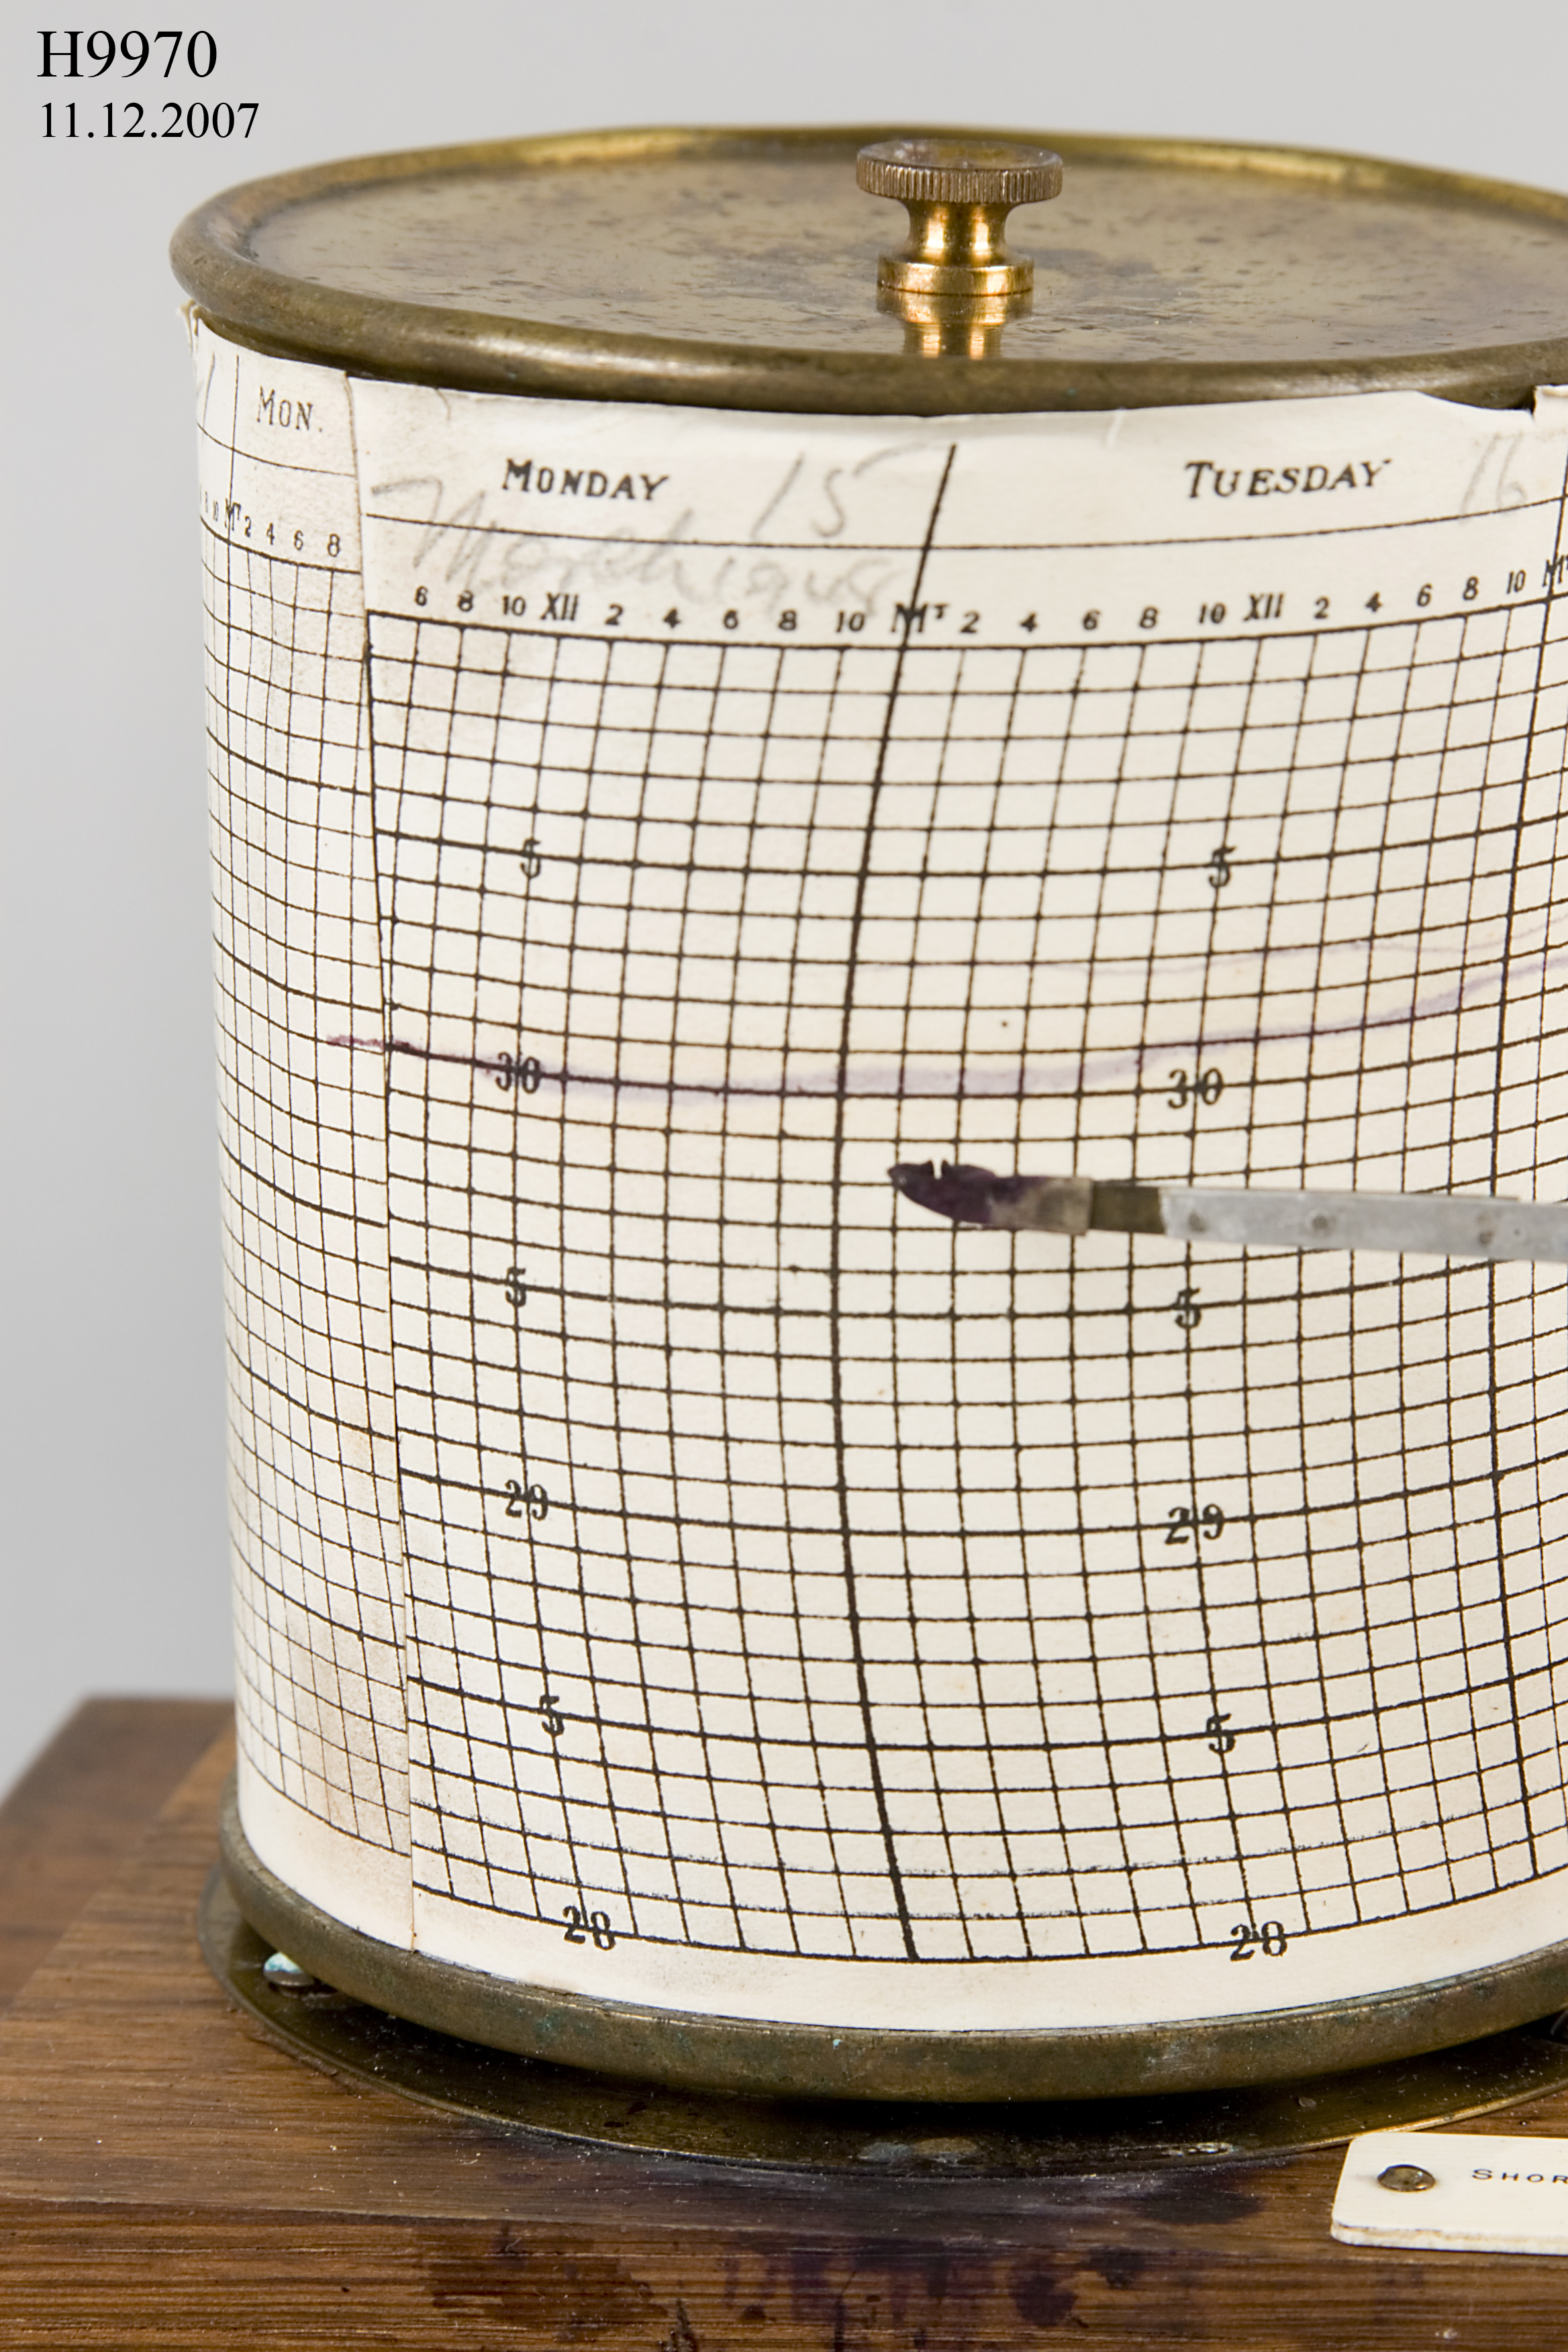 Aneroid barometer made by Short and Mason